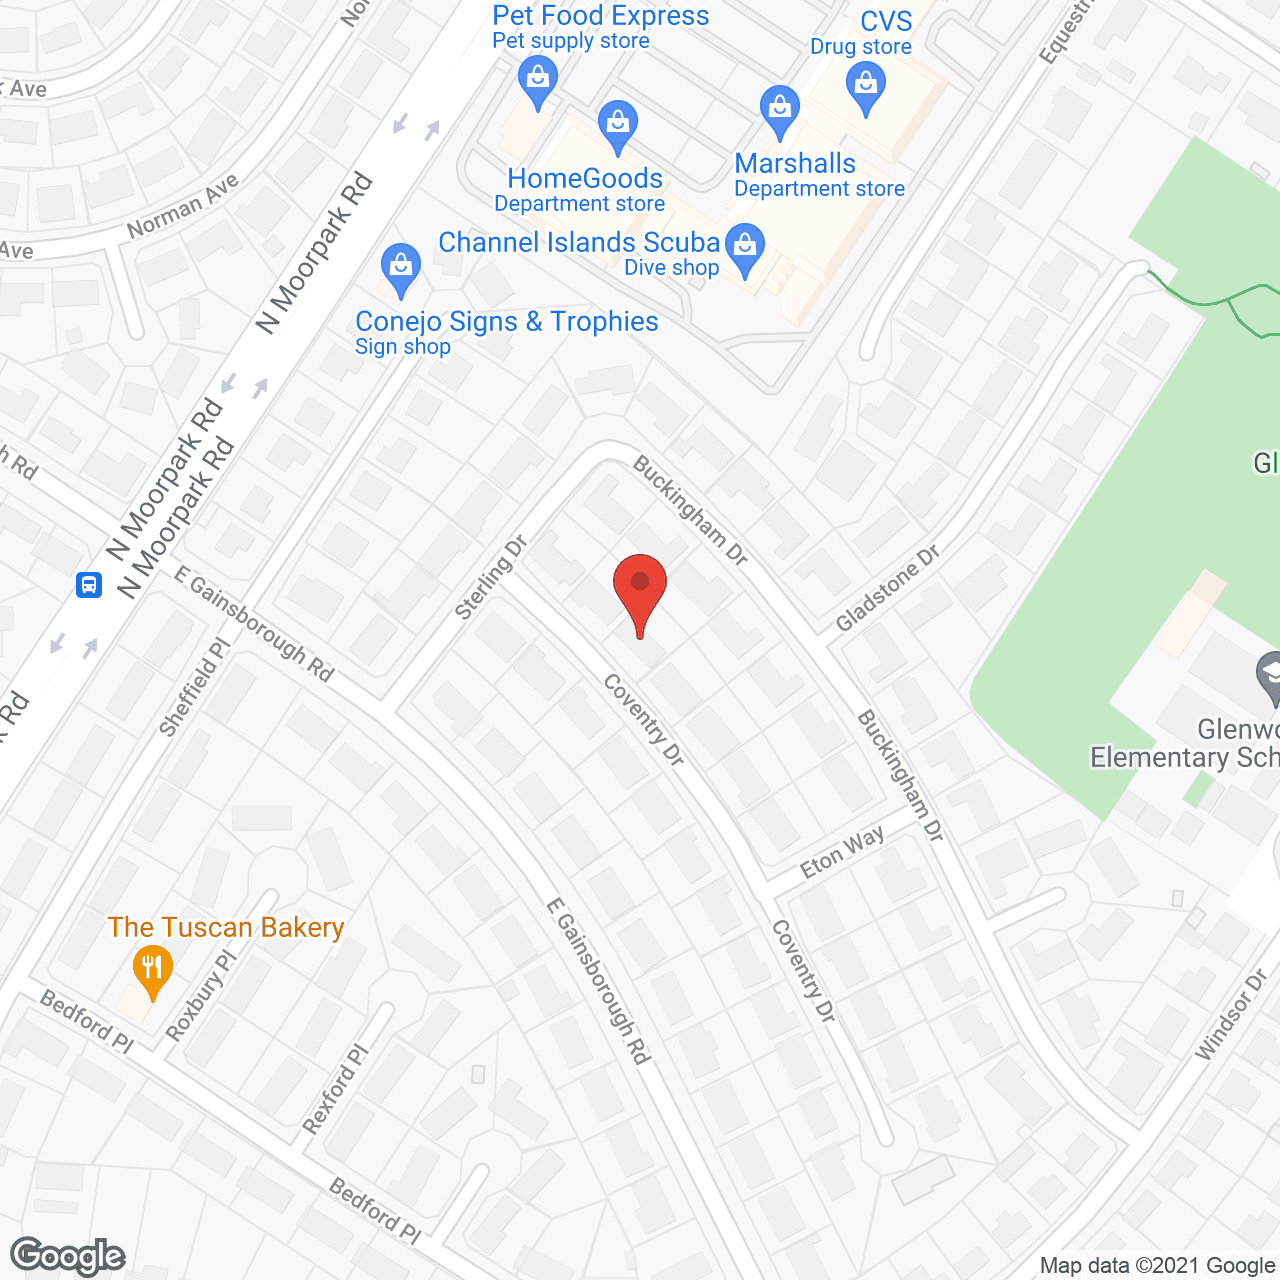 Navita Residence Coventry Drive in google map